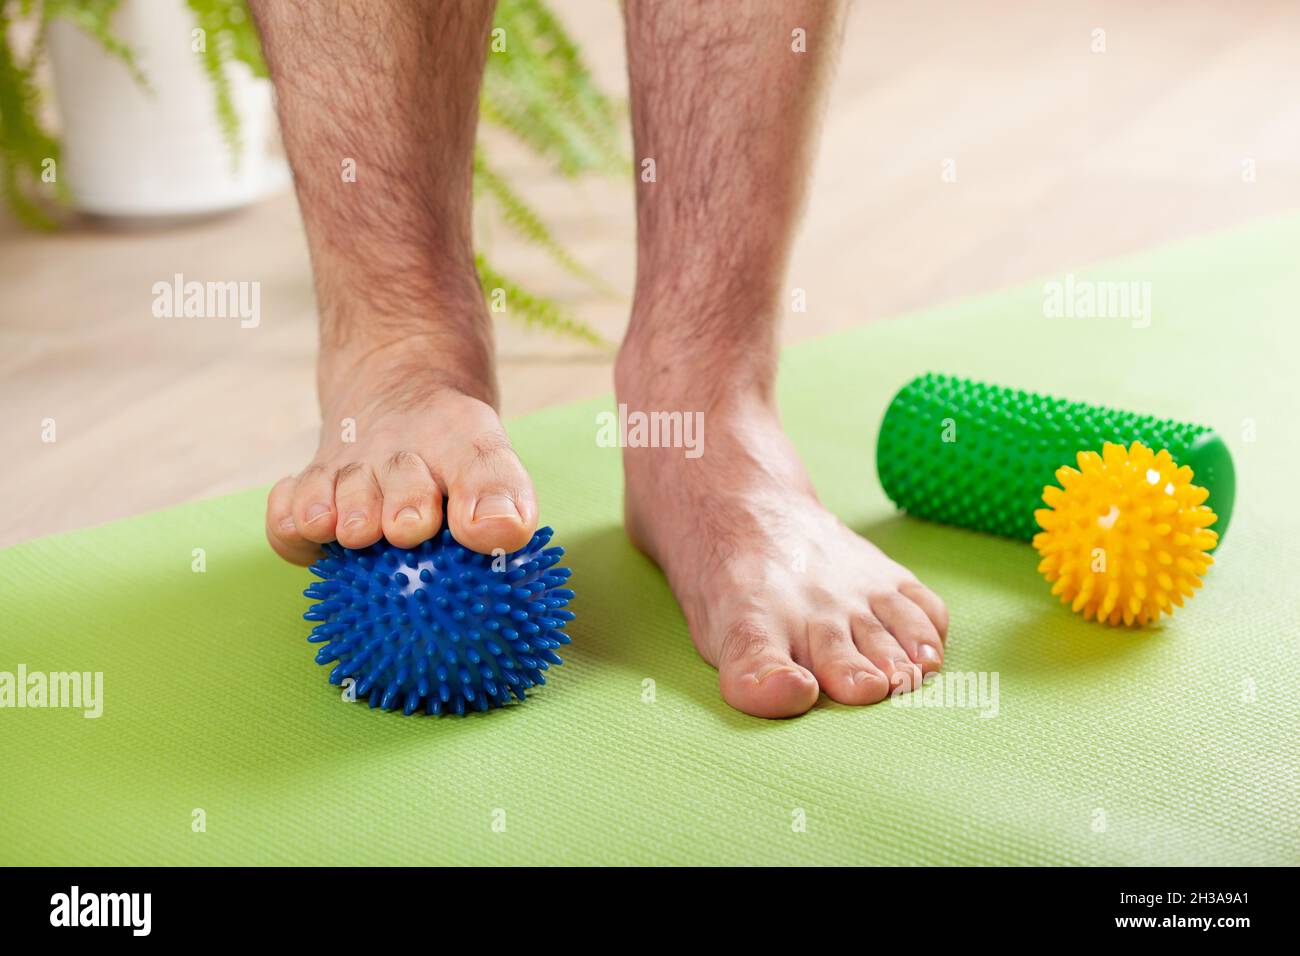 man doing flatfoot correction gymnastic exercise using massage ball at home Stock Photo